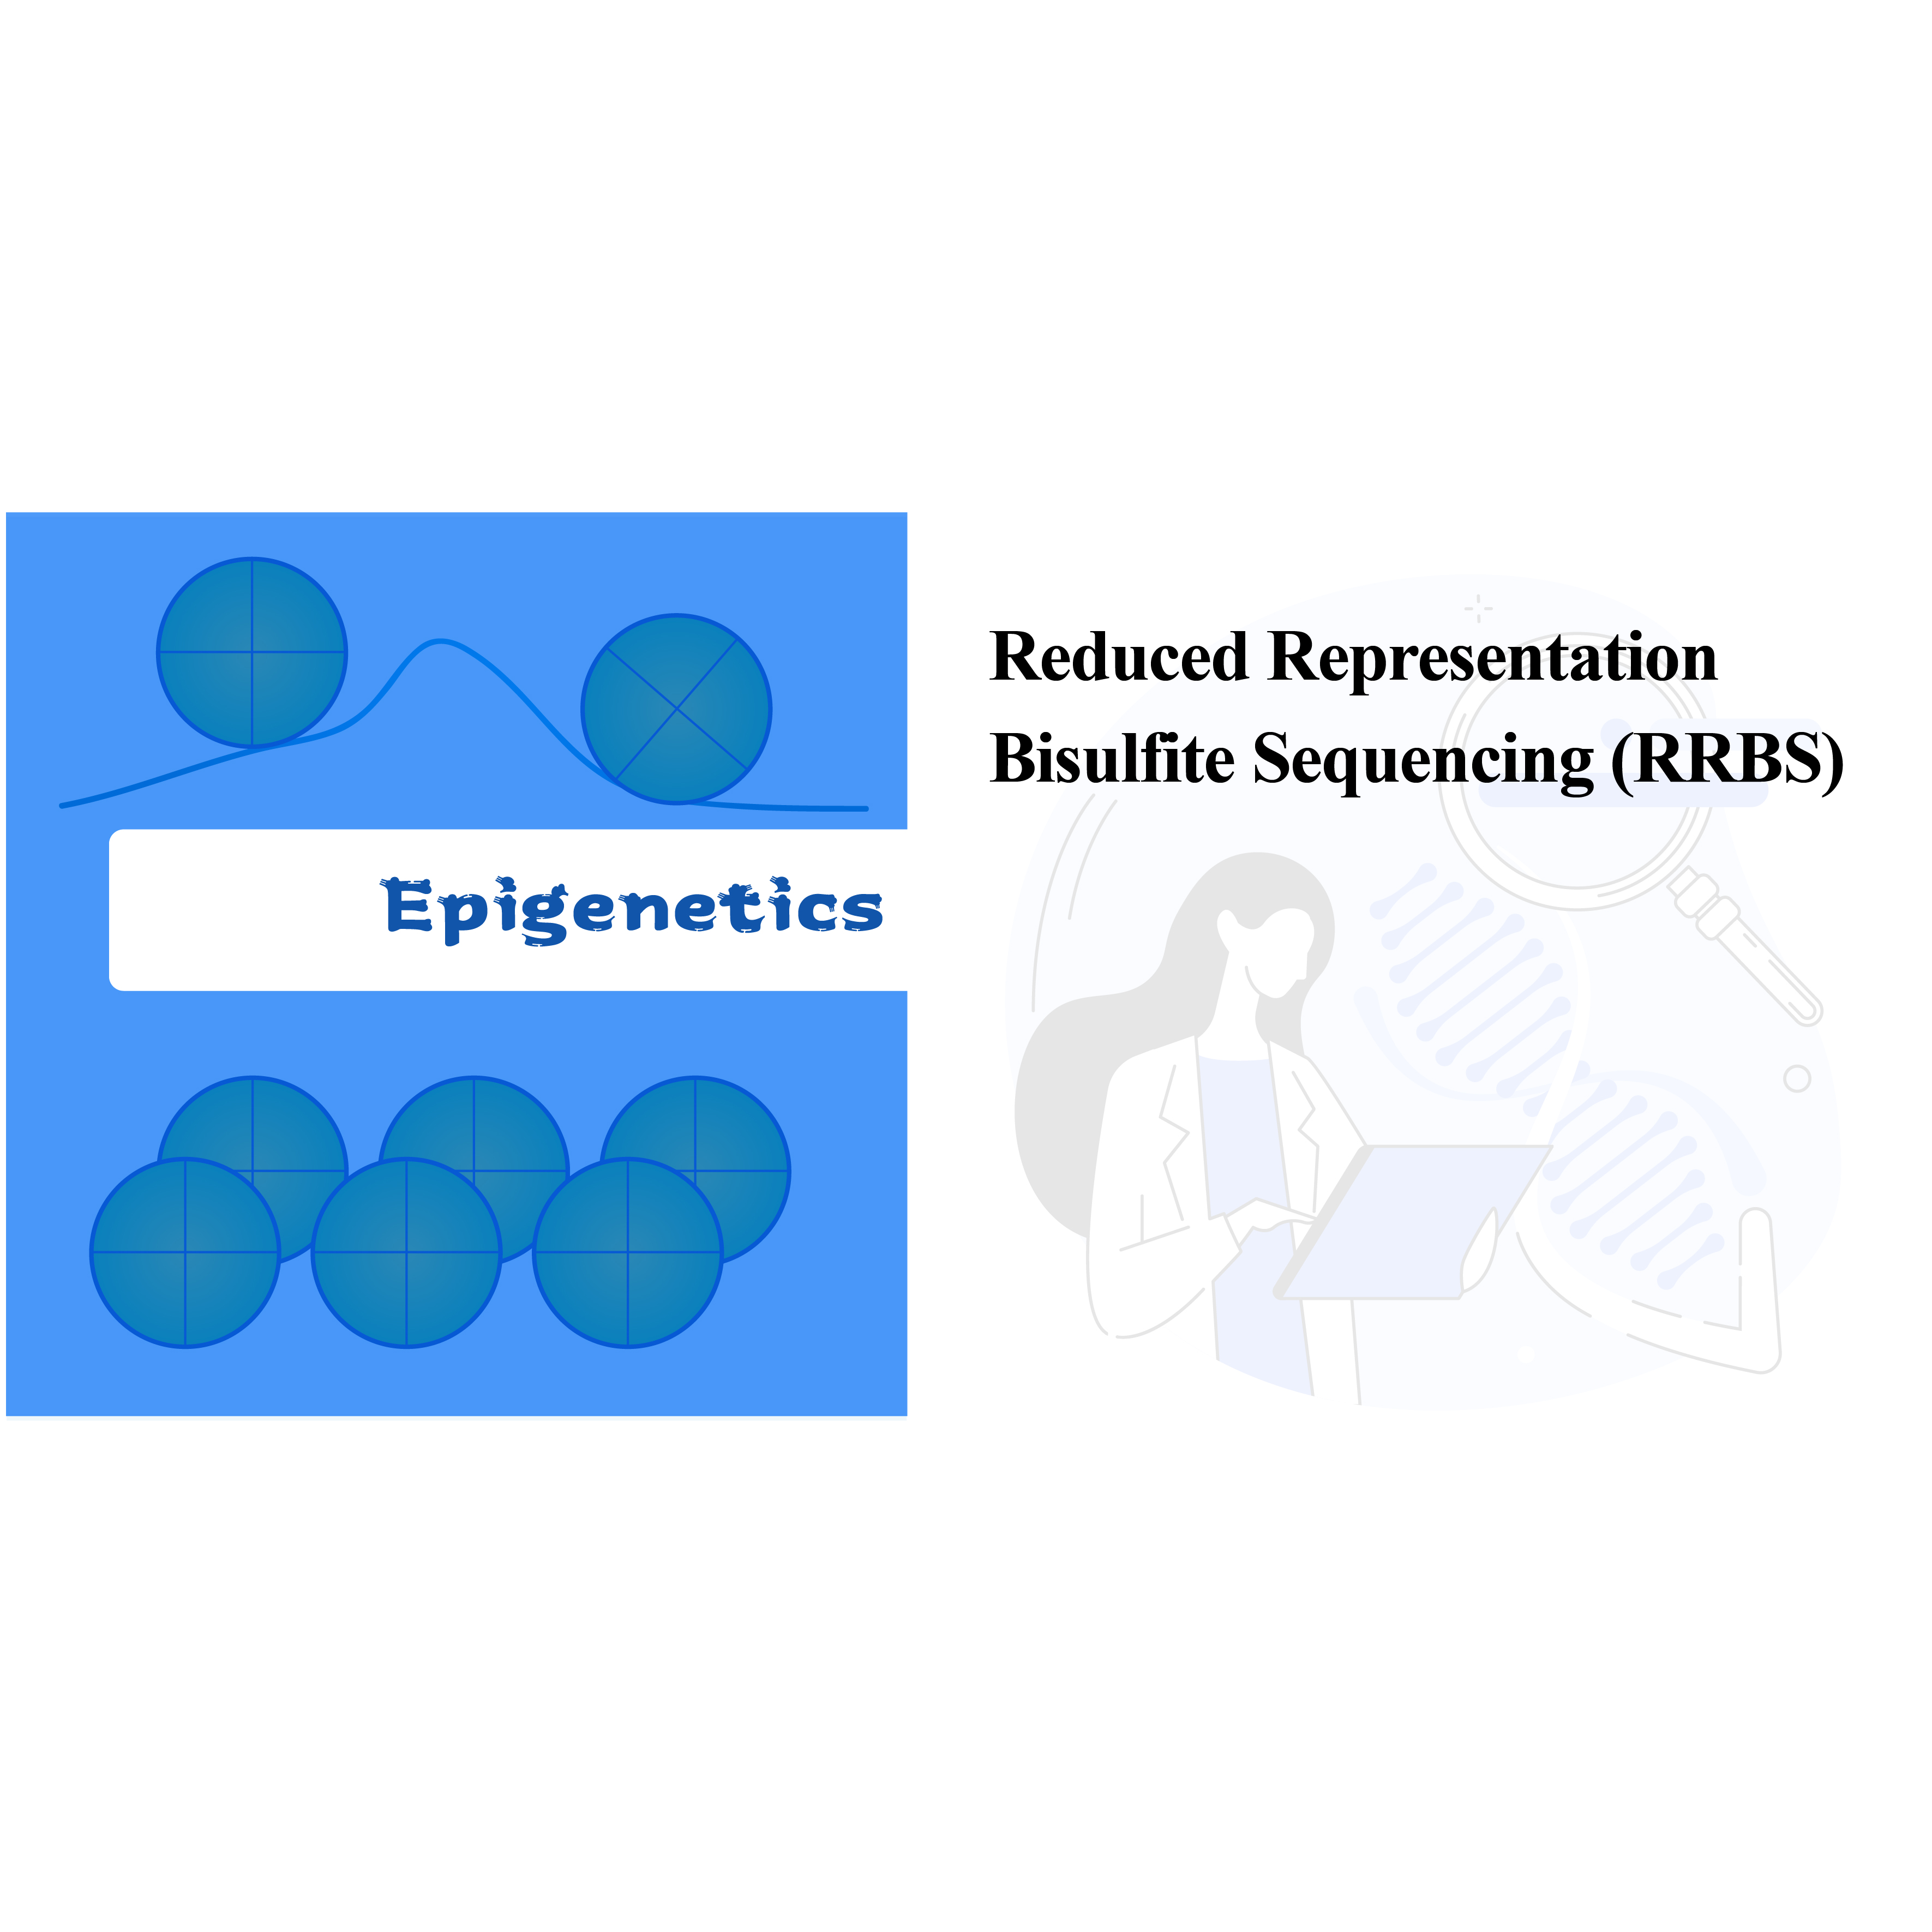 Secuenciación de bisulfito de representación reducida (RRBS)